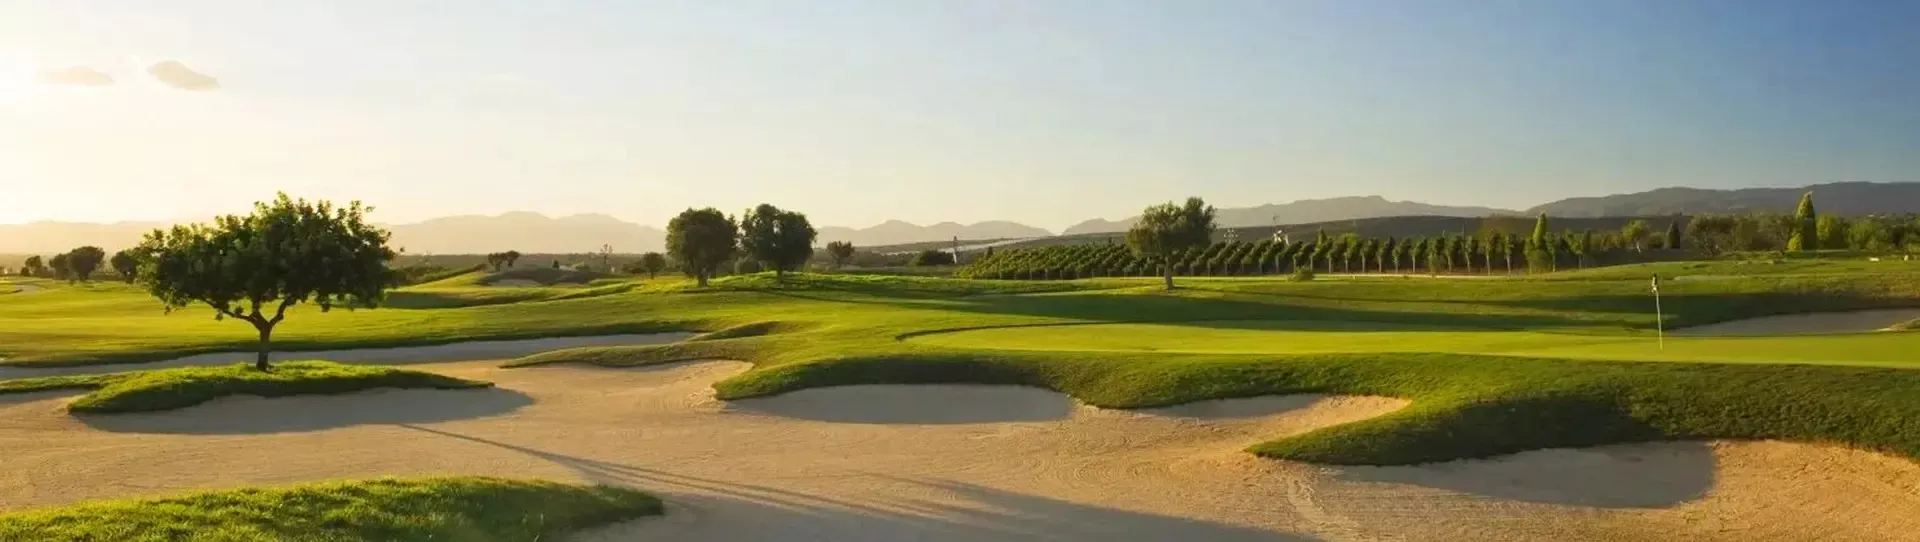 Spain golf courses - Son Gual Golf Course - Photo 1